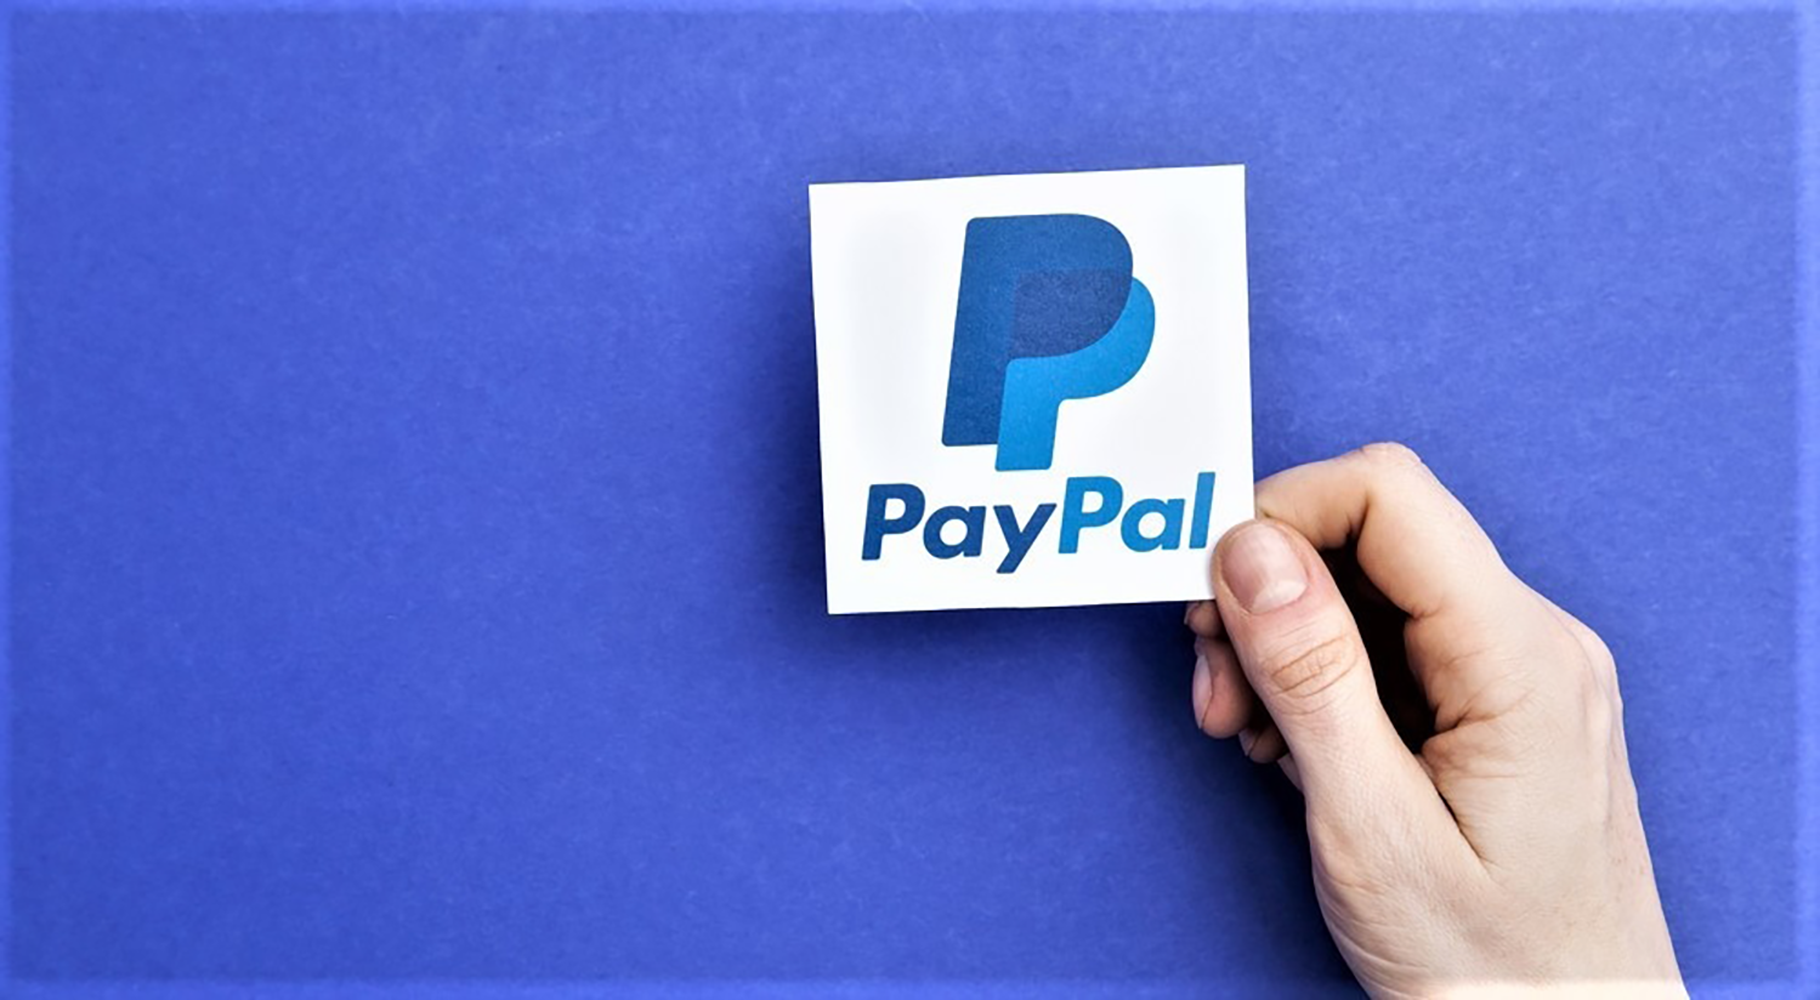 PayPal Image Overview - HubPrix.com